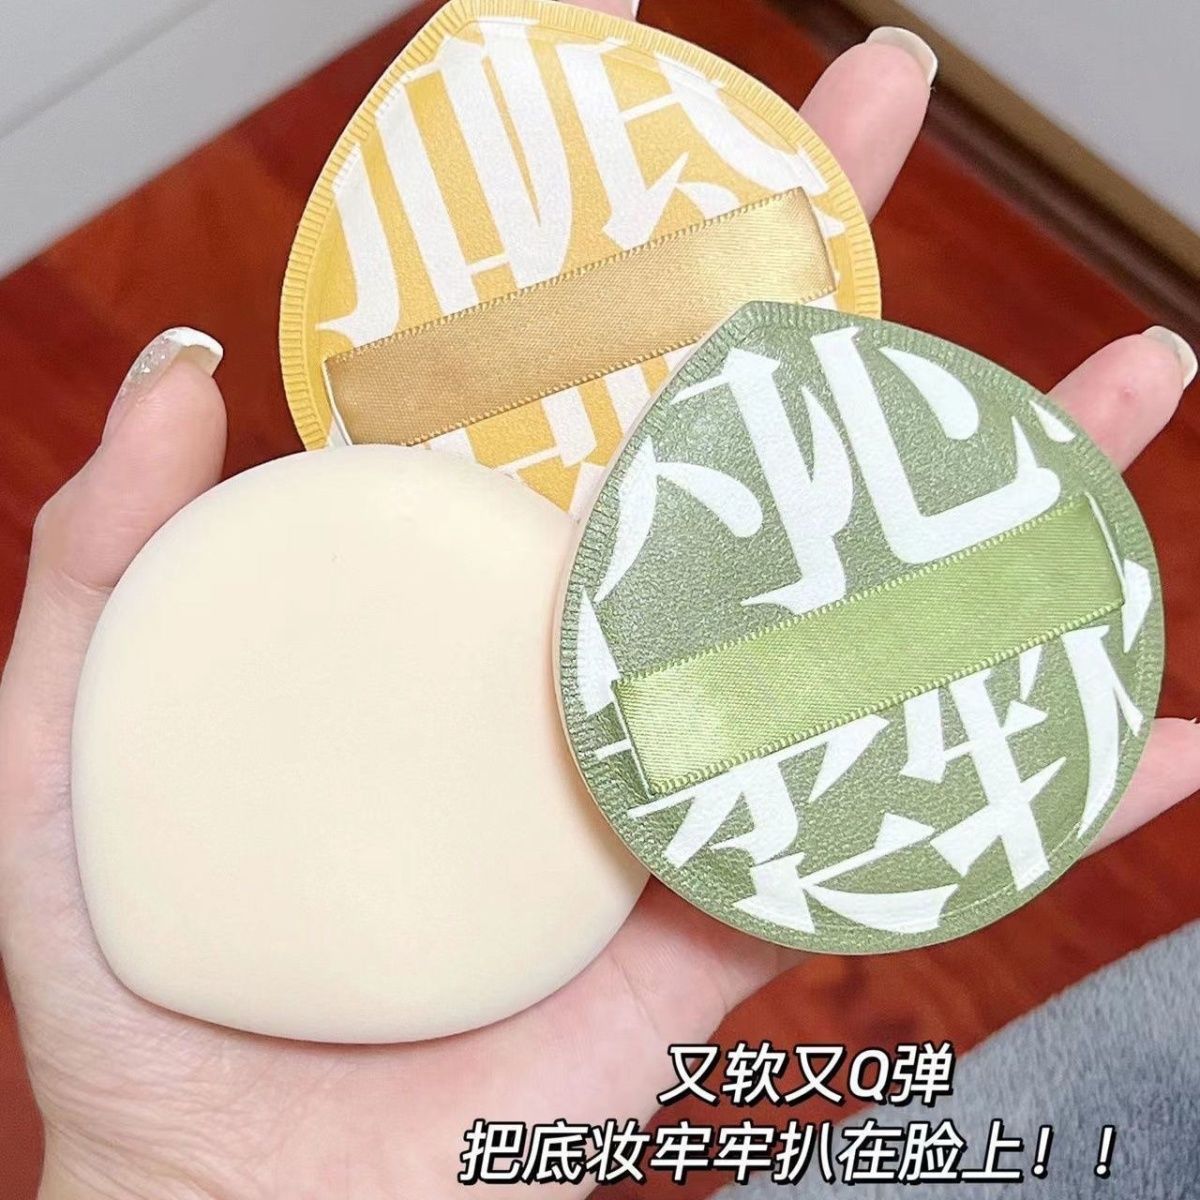 Xiaohongshu 100 points marshmallow wet and dry dual-use ultra-soft skin not to eat powder air cushion sponge beauty makeup egg grape puff